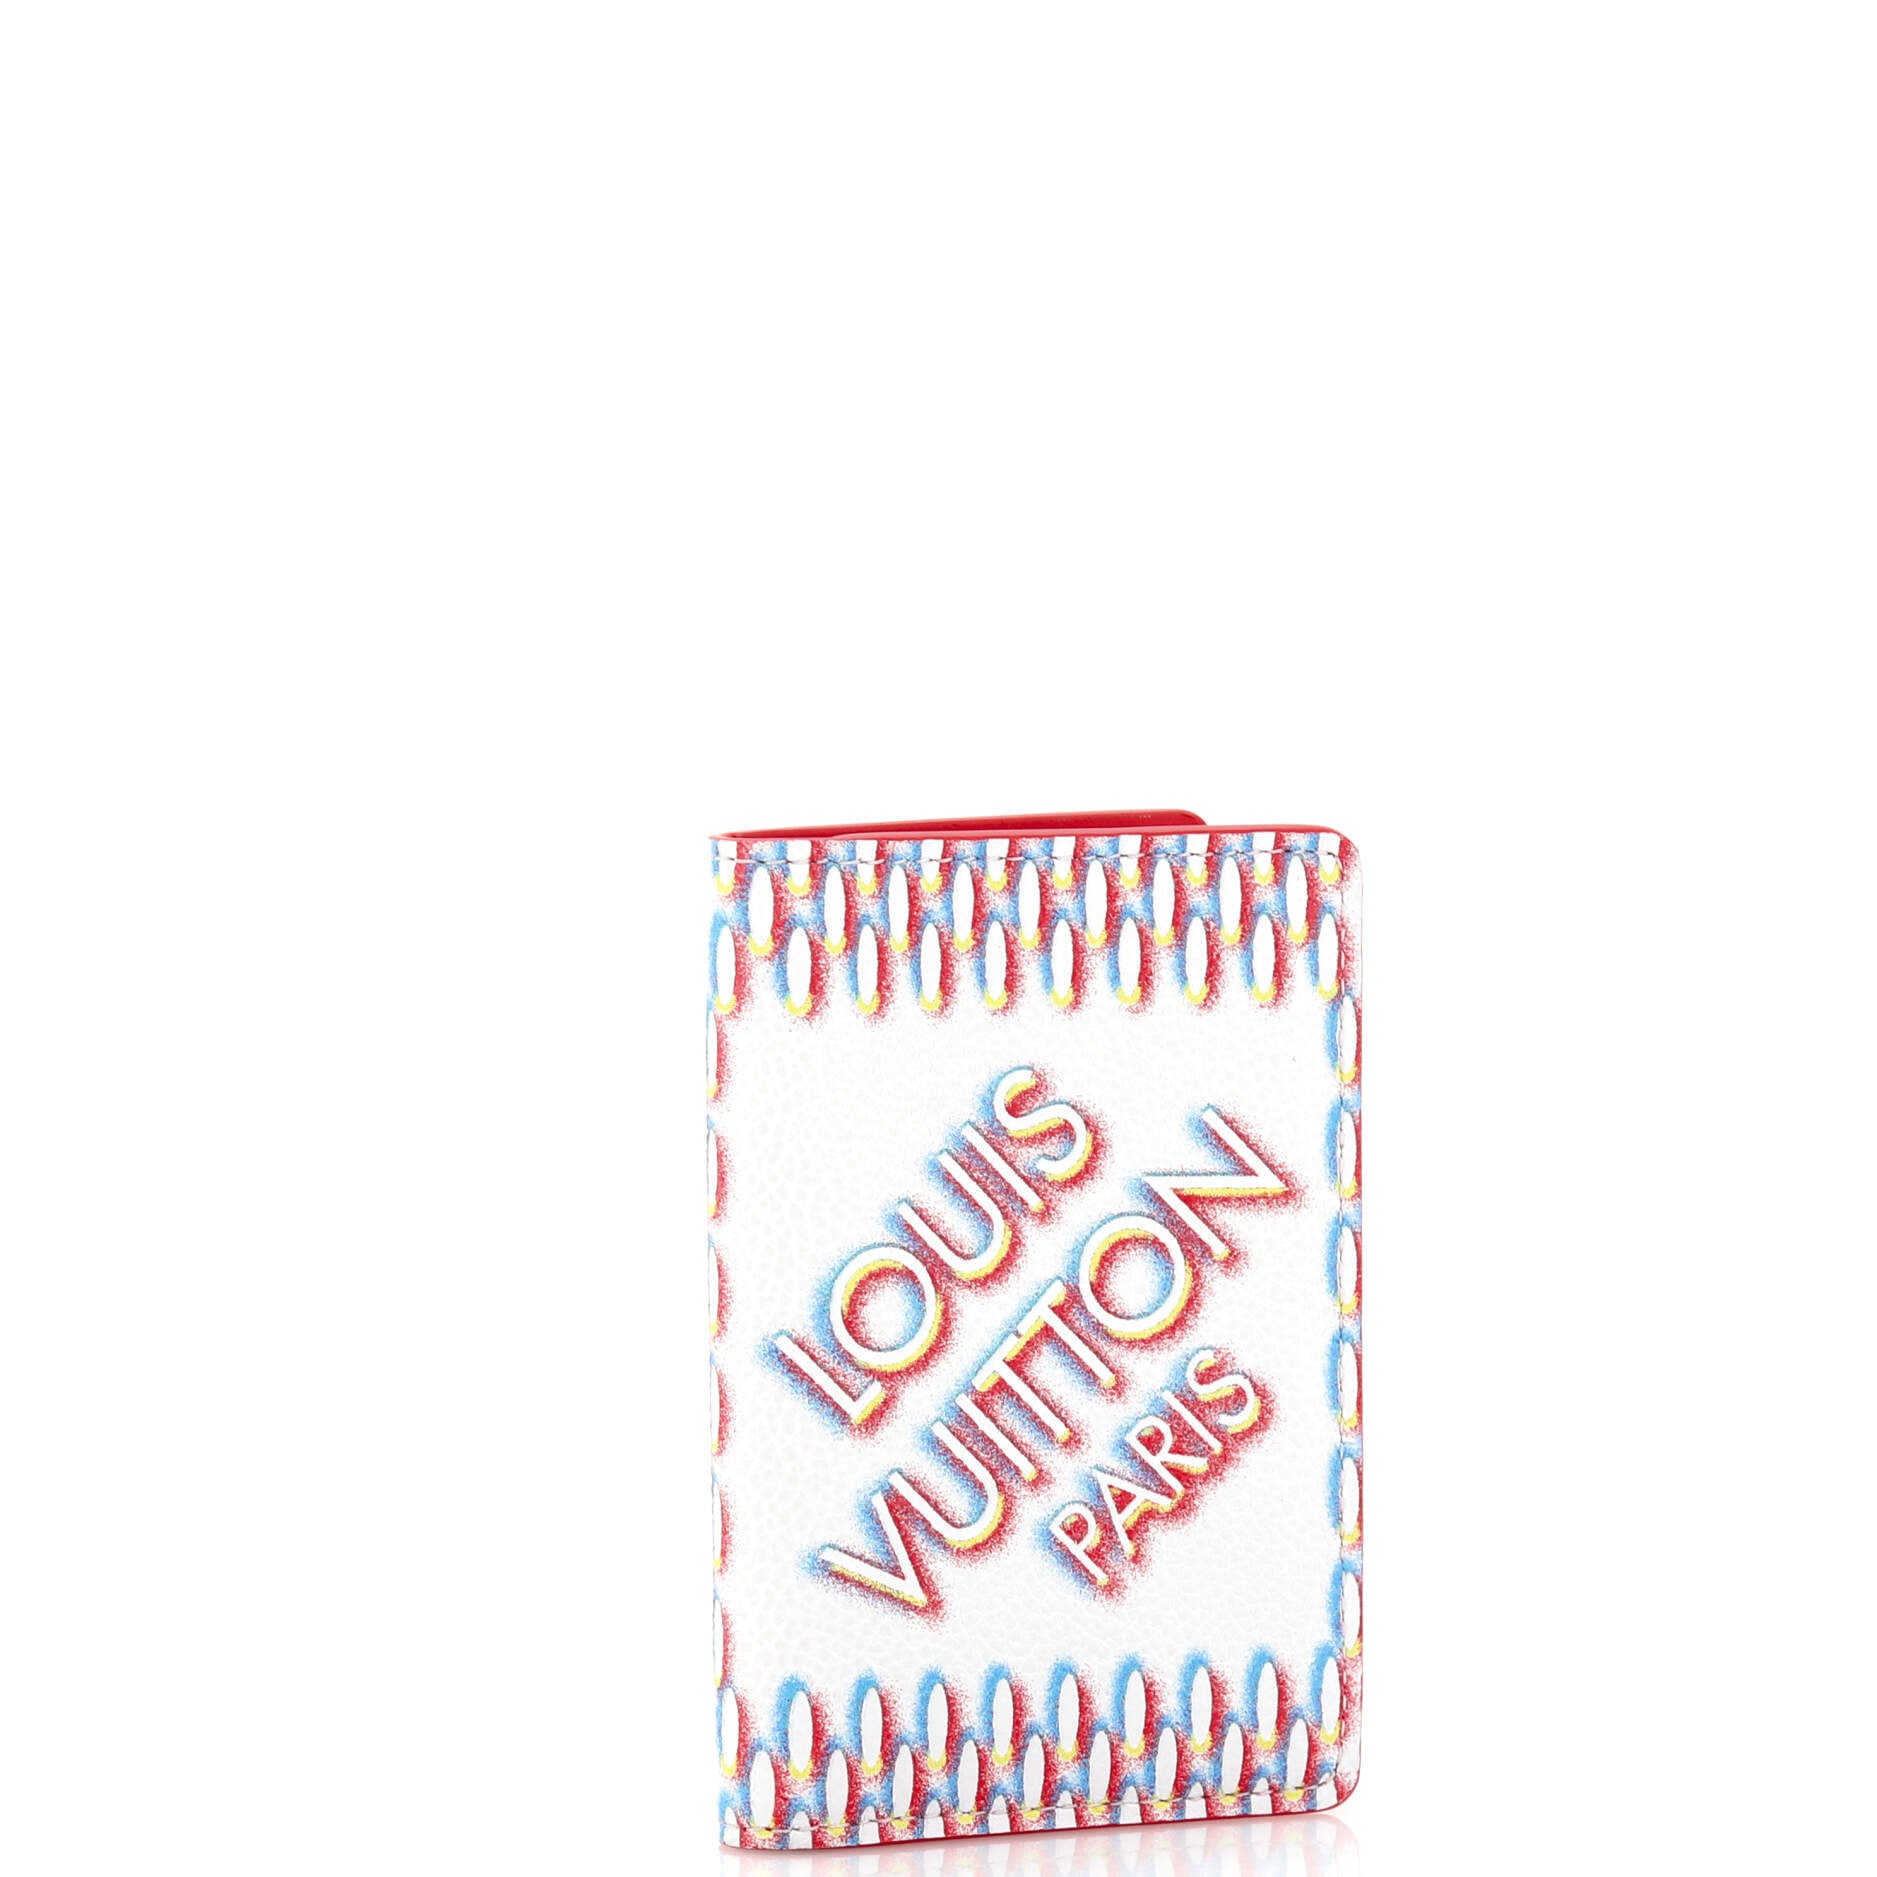 Louis Vuitton x NBA Monogram Canvas Trio Pocket Keepall